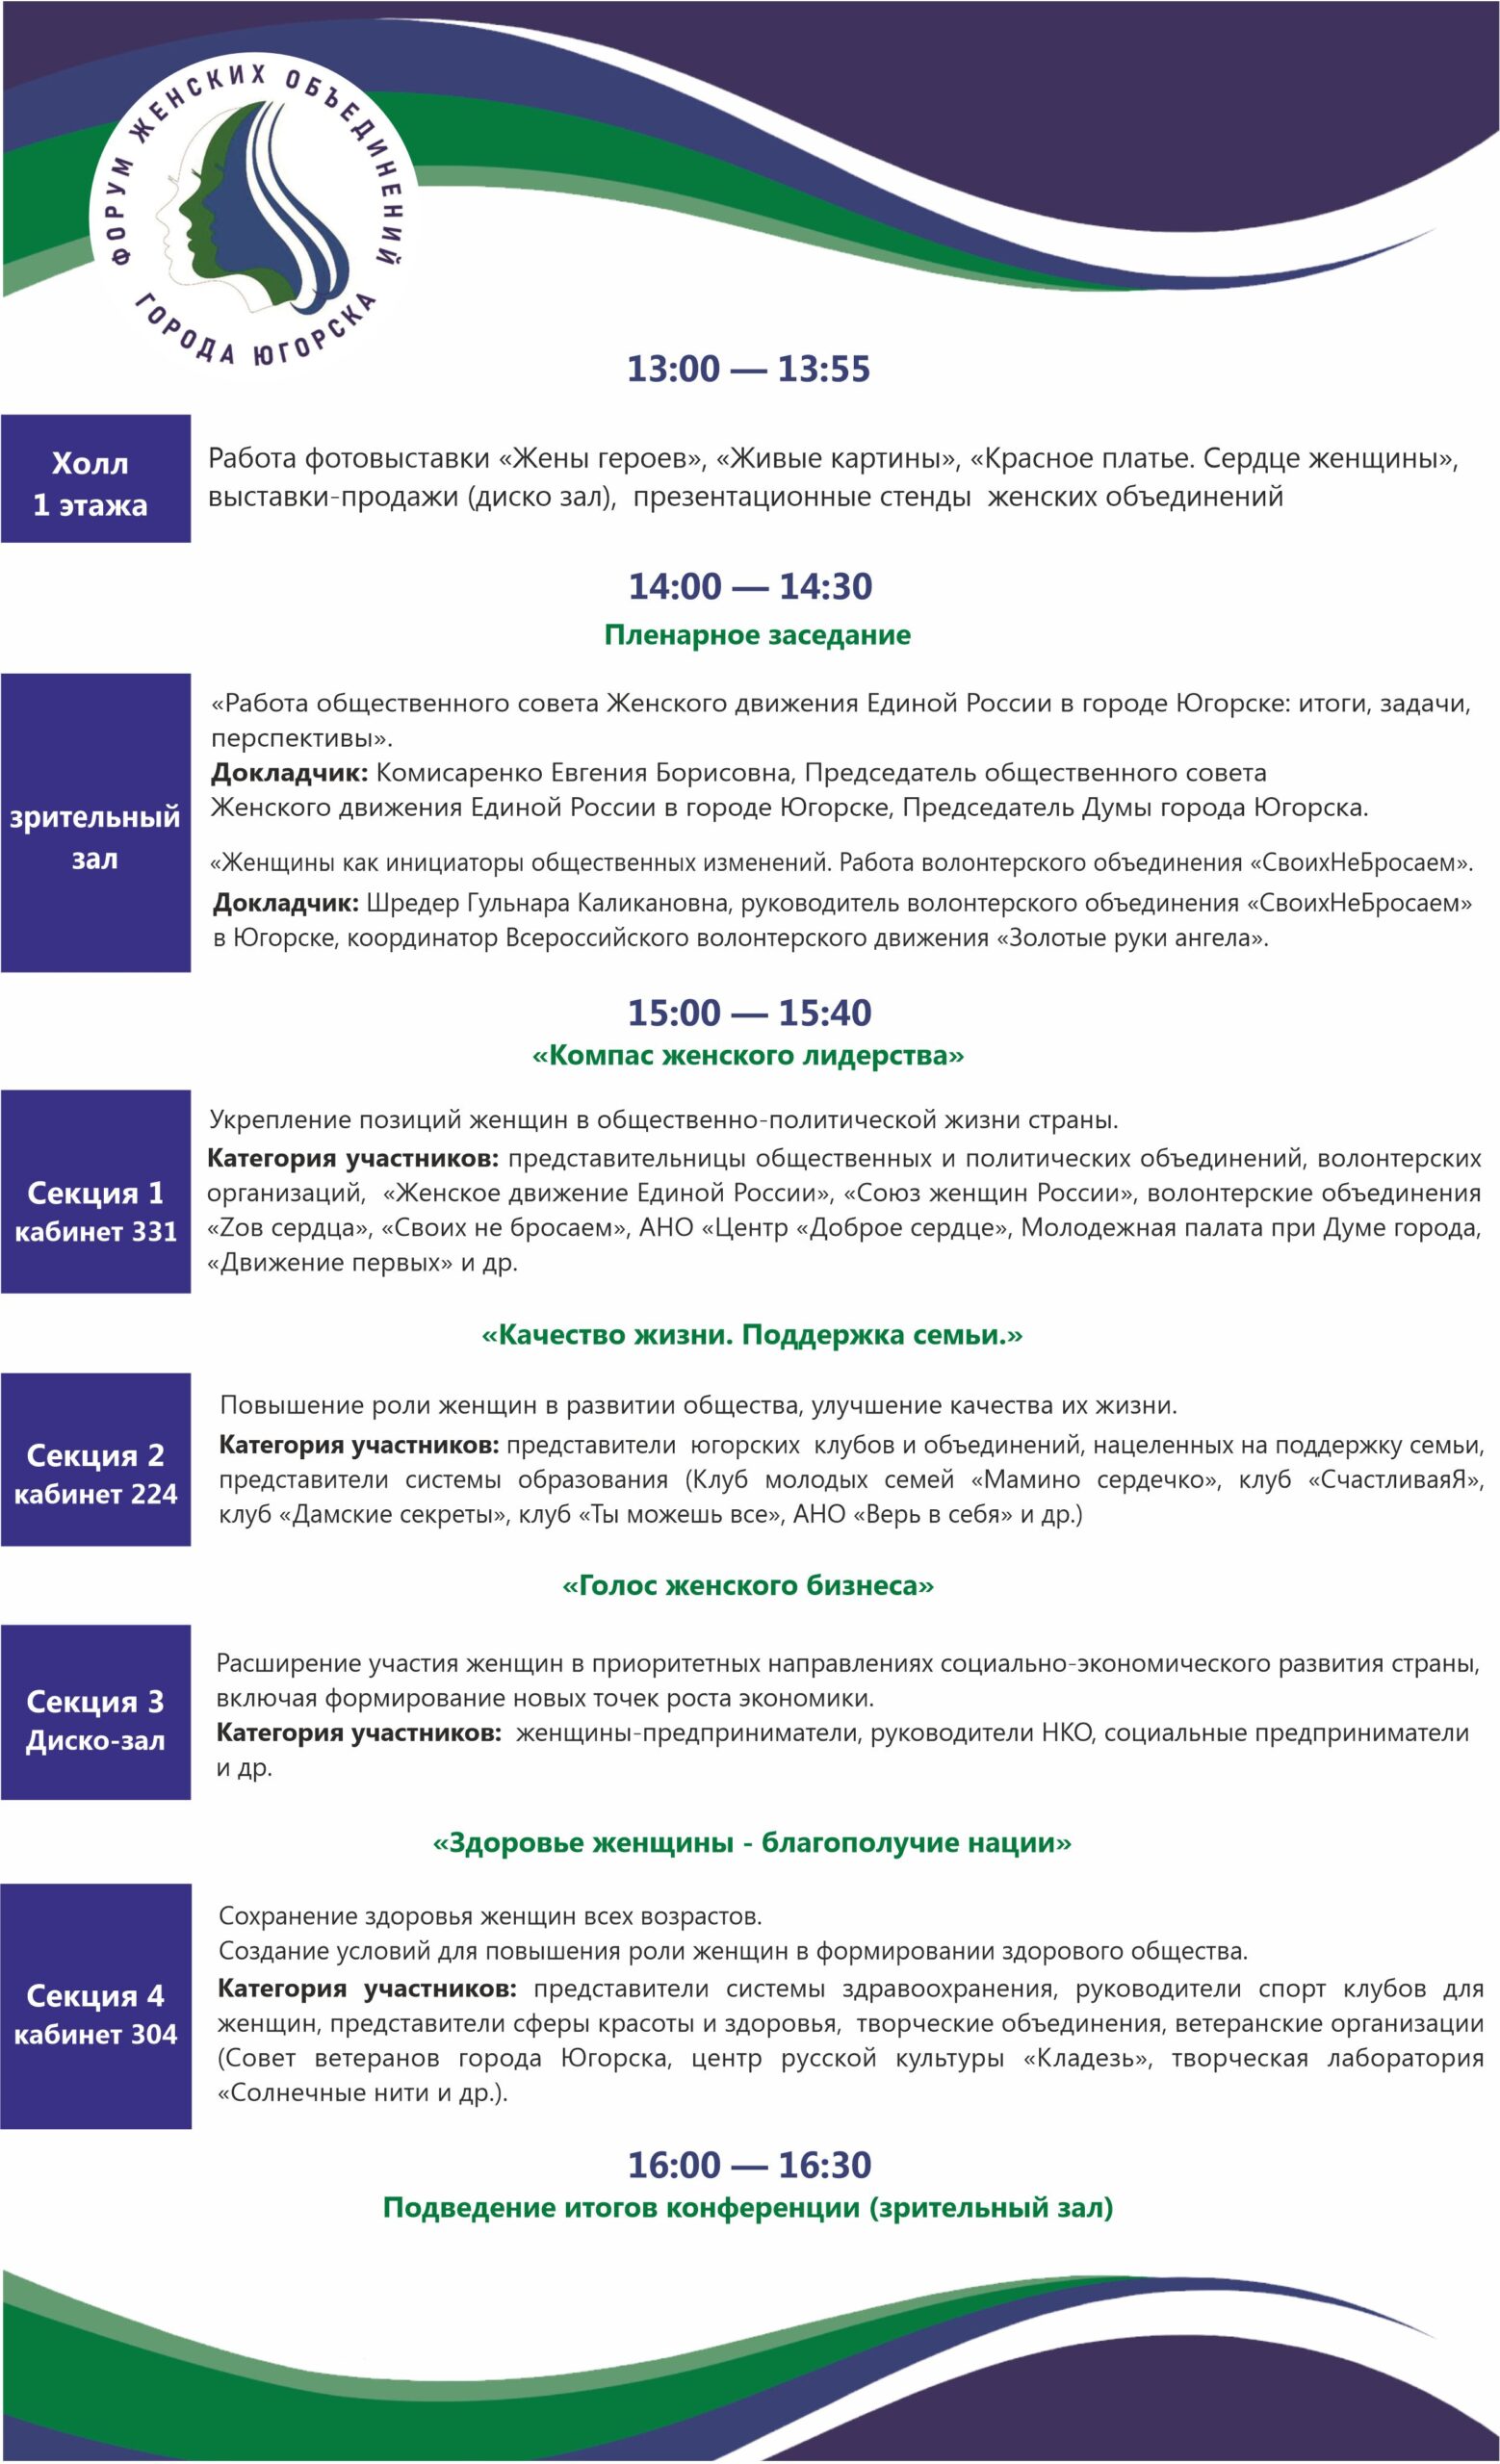 Программа Форума женских объединений города Югорска